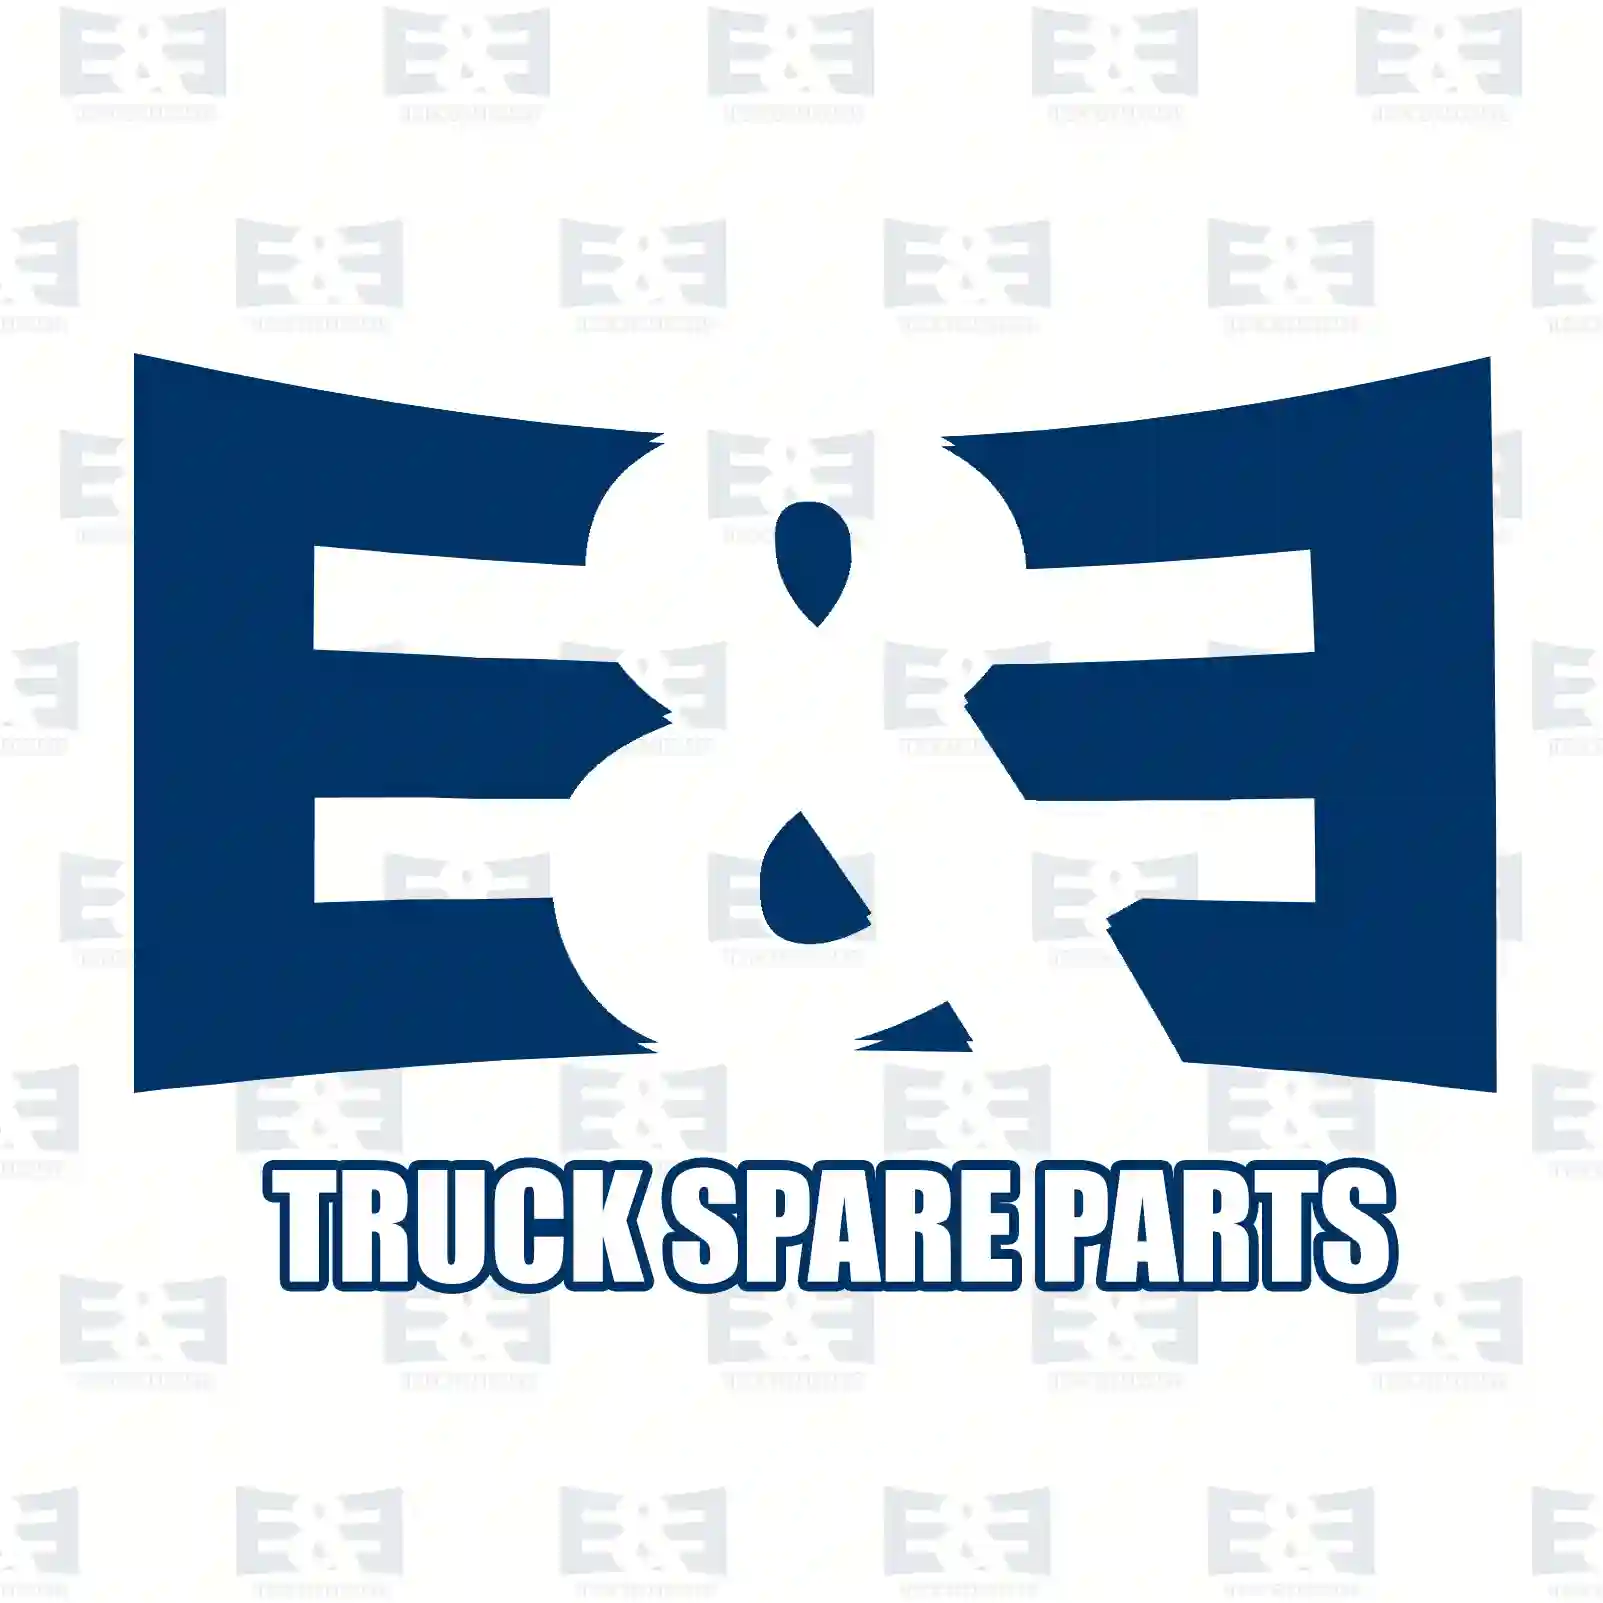 Fan Fan with clutch, EE No 2E2203258 ,  oem no:0012059206, 0012059306, 0022057806, 002205780680, 0022058206, 0022059406 E&E Truck Spare Parts | Truck Spare Parts, Auotomotive Spare Parts